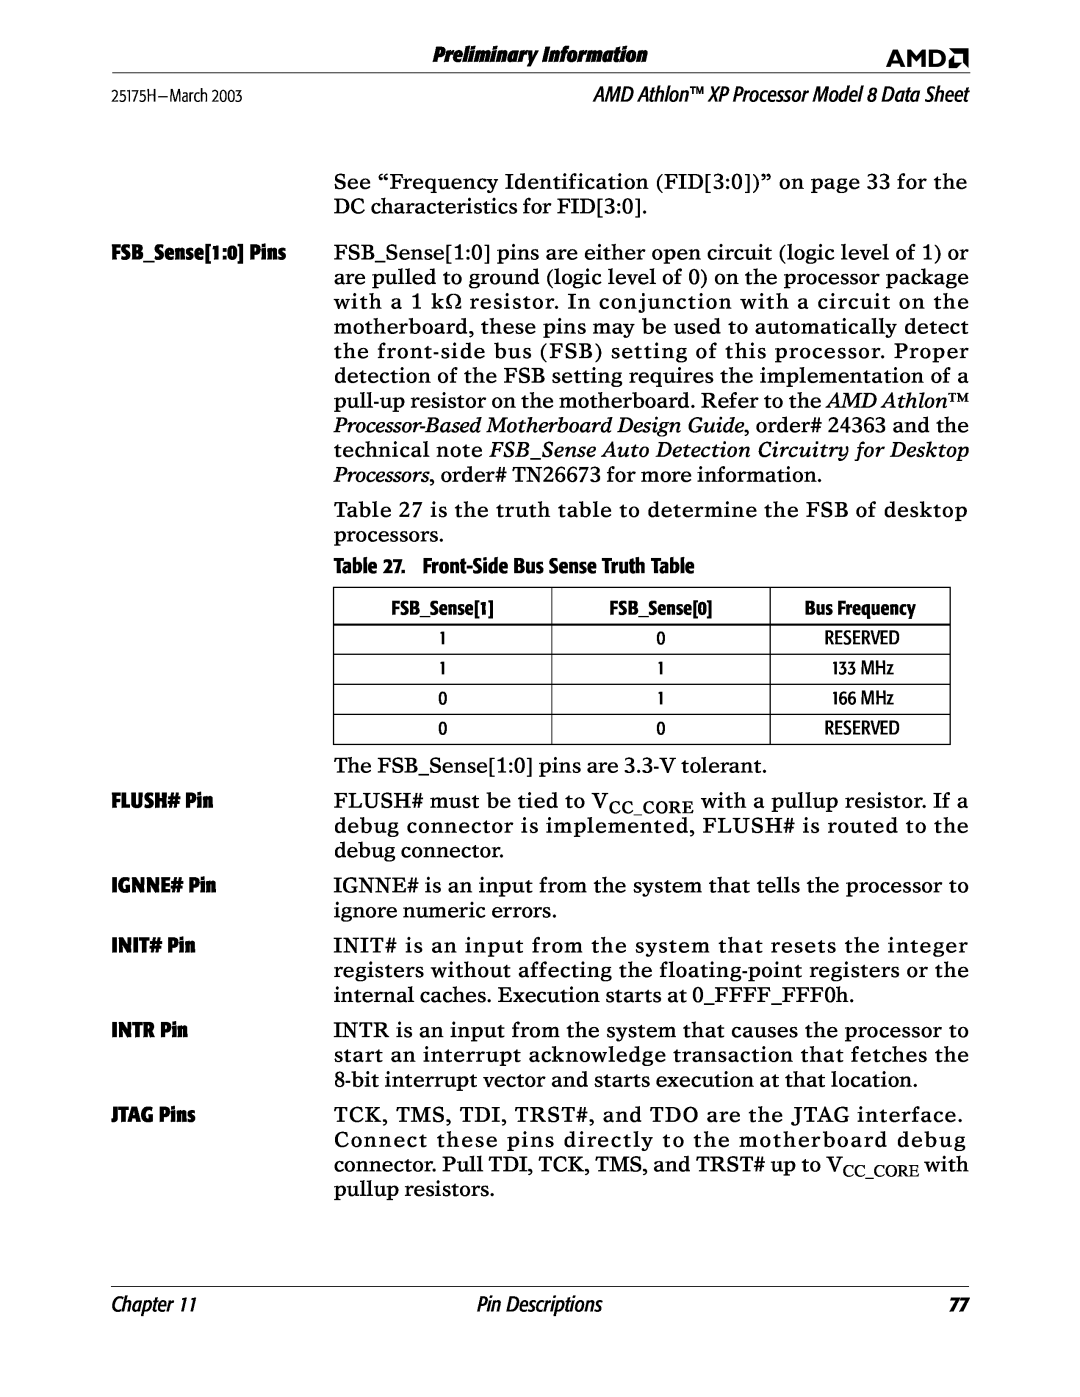 AMD 8 manual Preliminary Information, FLUSH# Pin, IGNNE# Pin, INIT# Pin, INTR Pin, JTAG Pins, Chapter, Pin Descriptions 